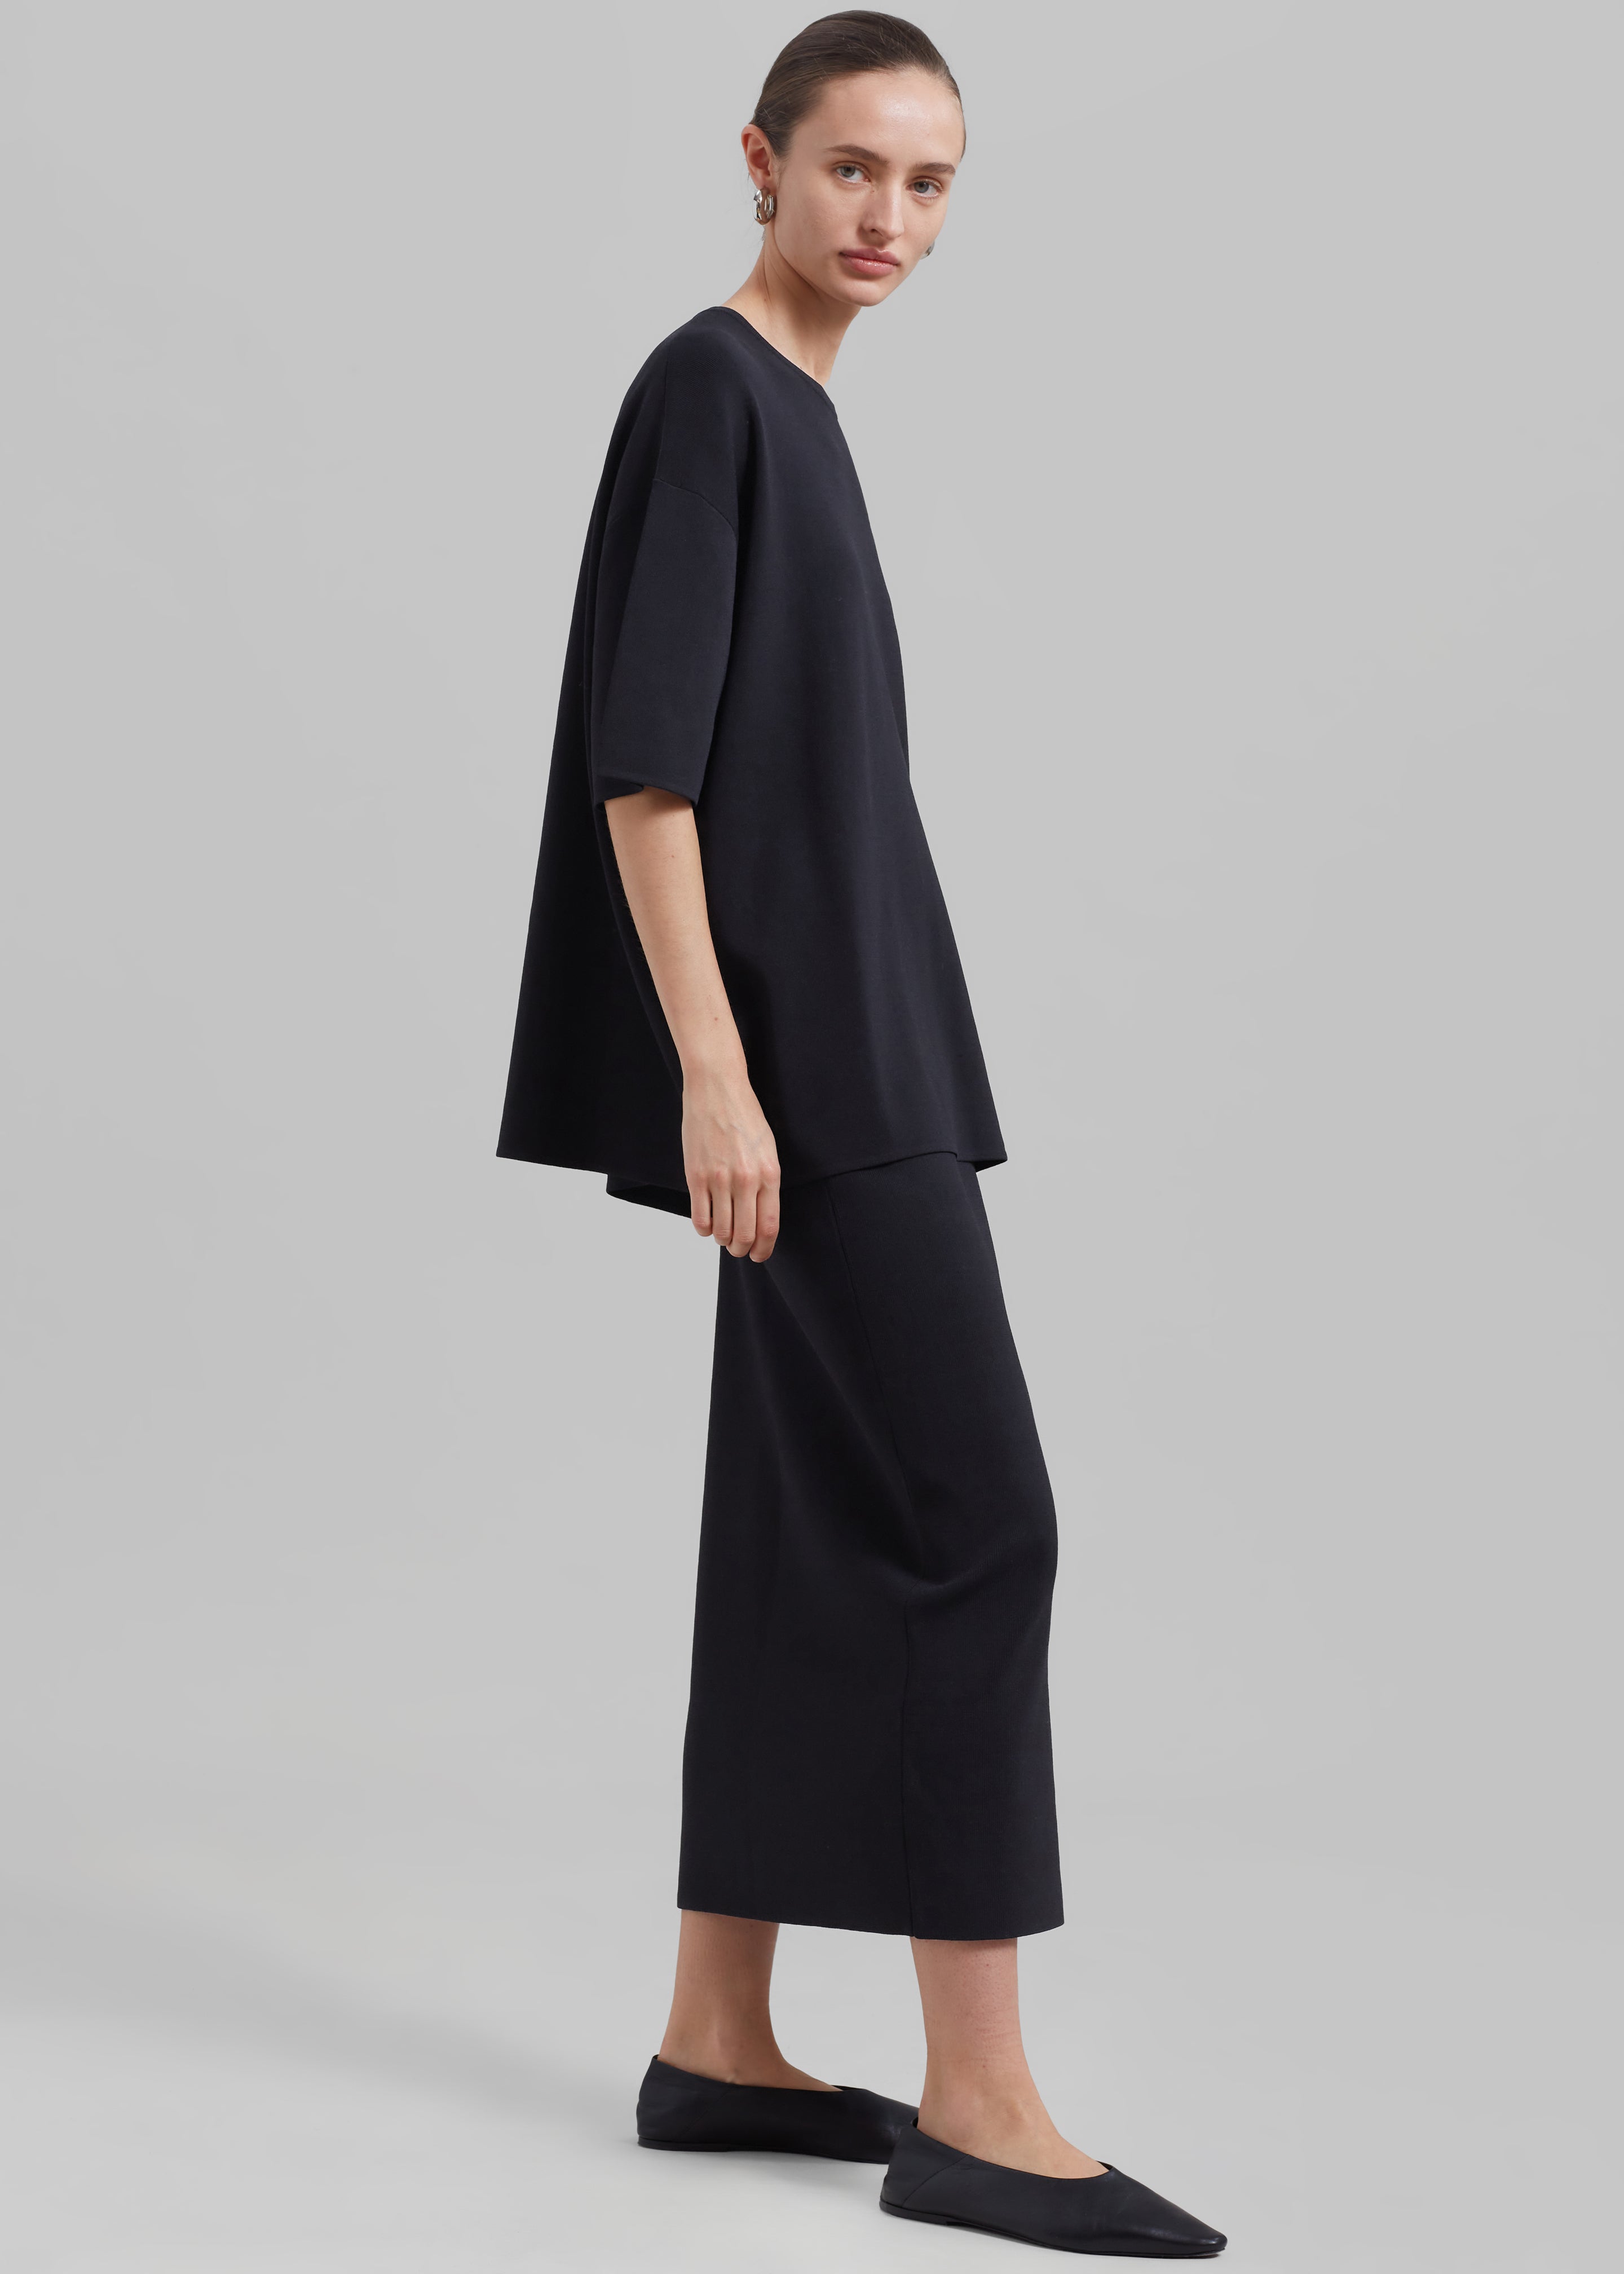 Solange Knit Pencil Skirt - Black - 4